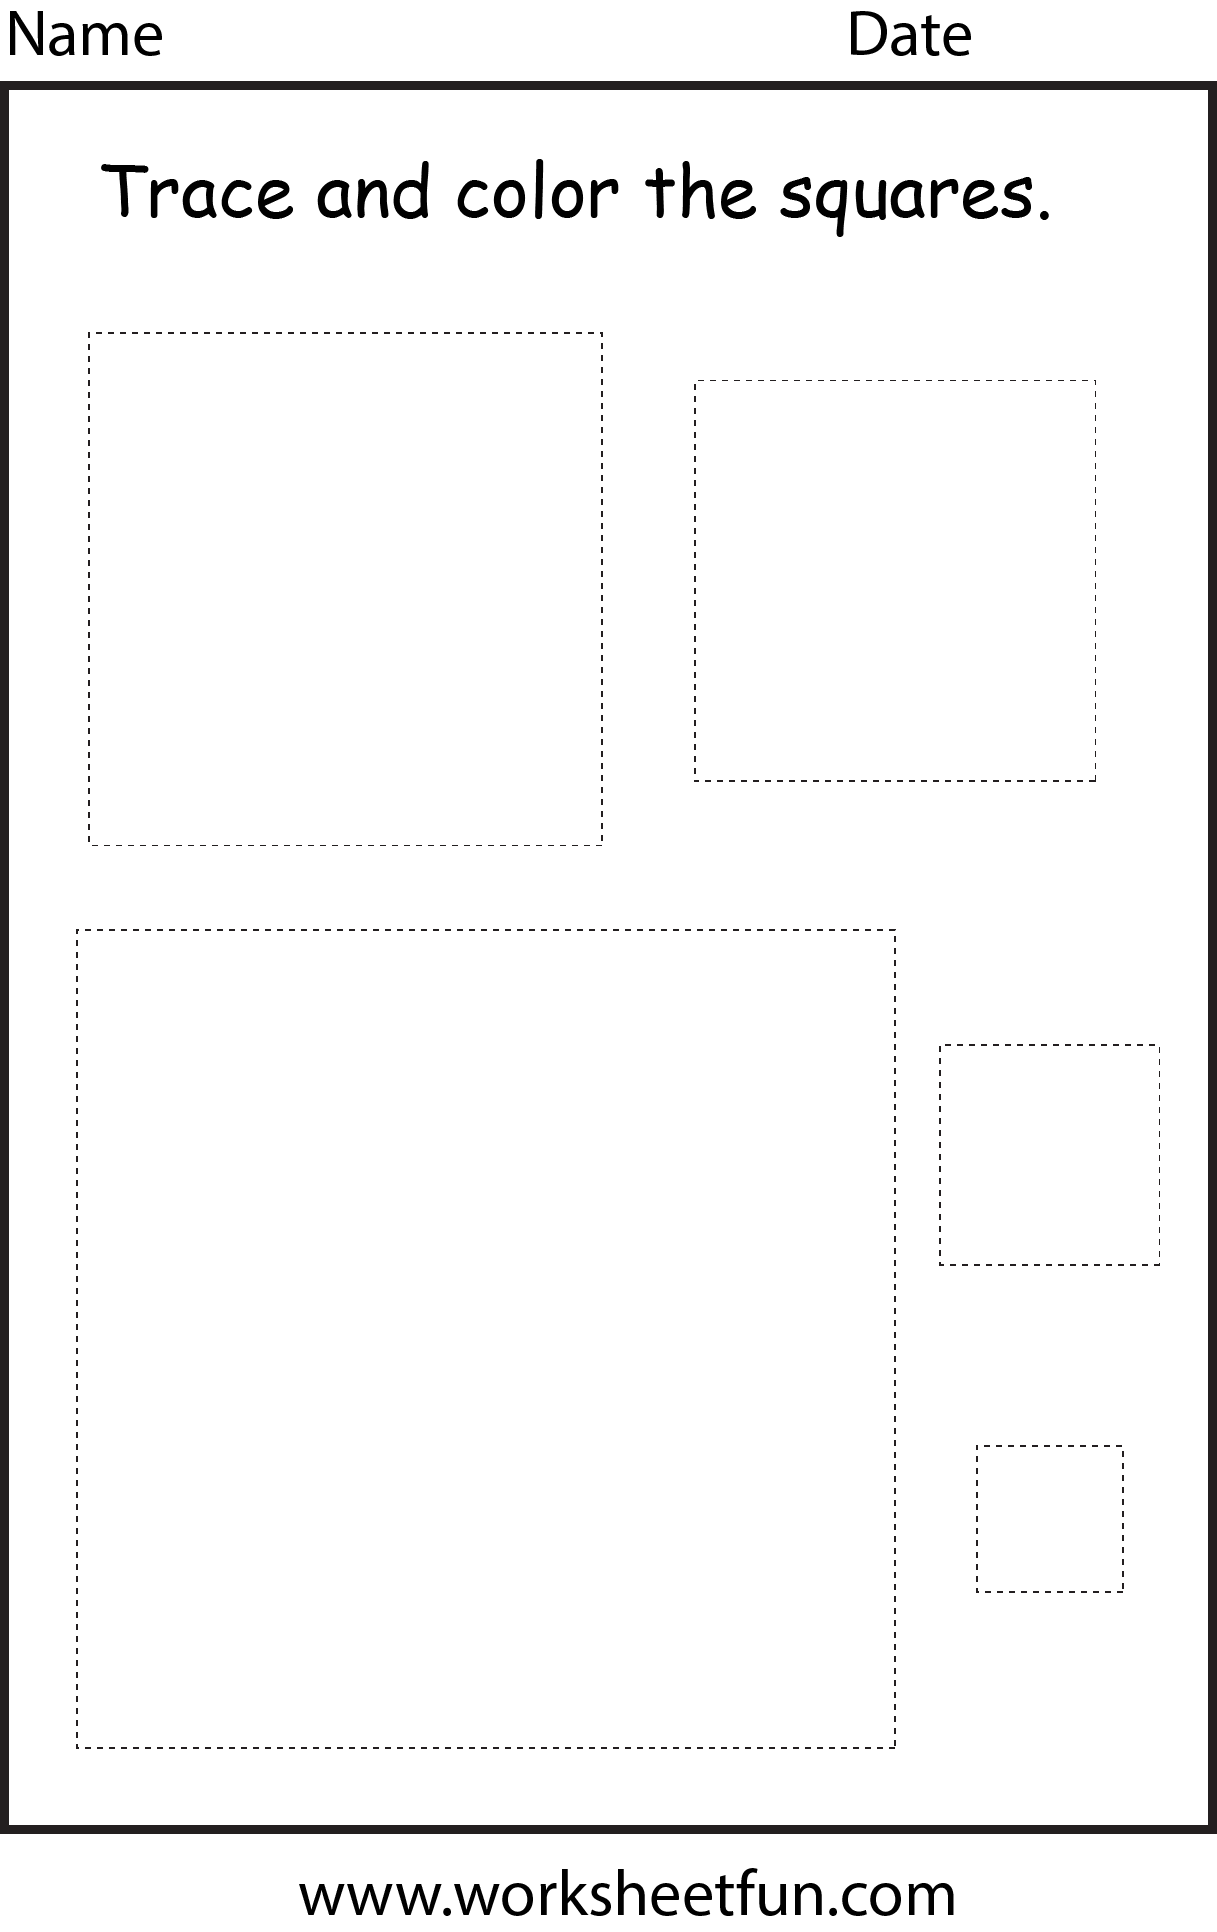 5 Best Images of Printable Square Worksheet - Square Root Worksheets